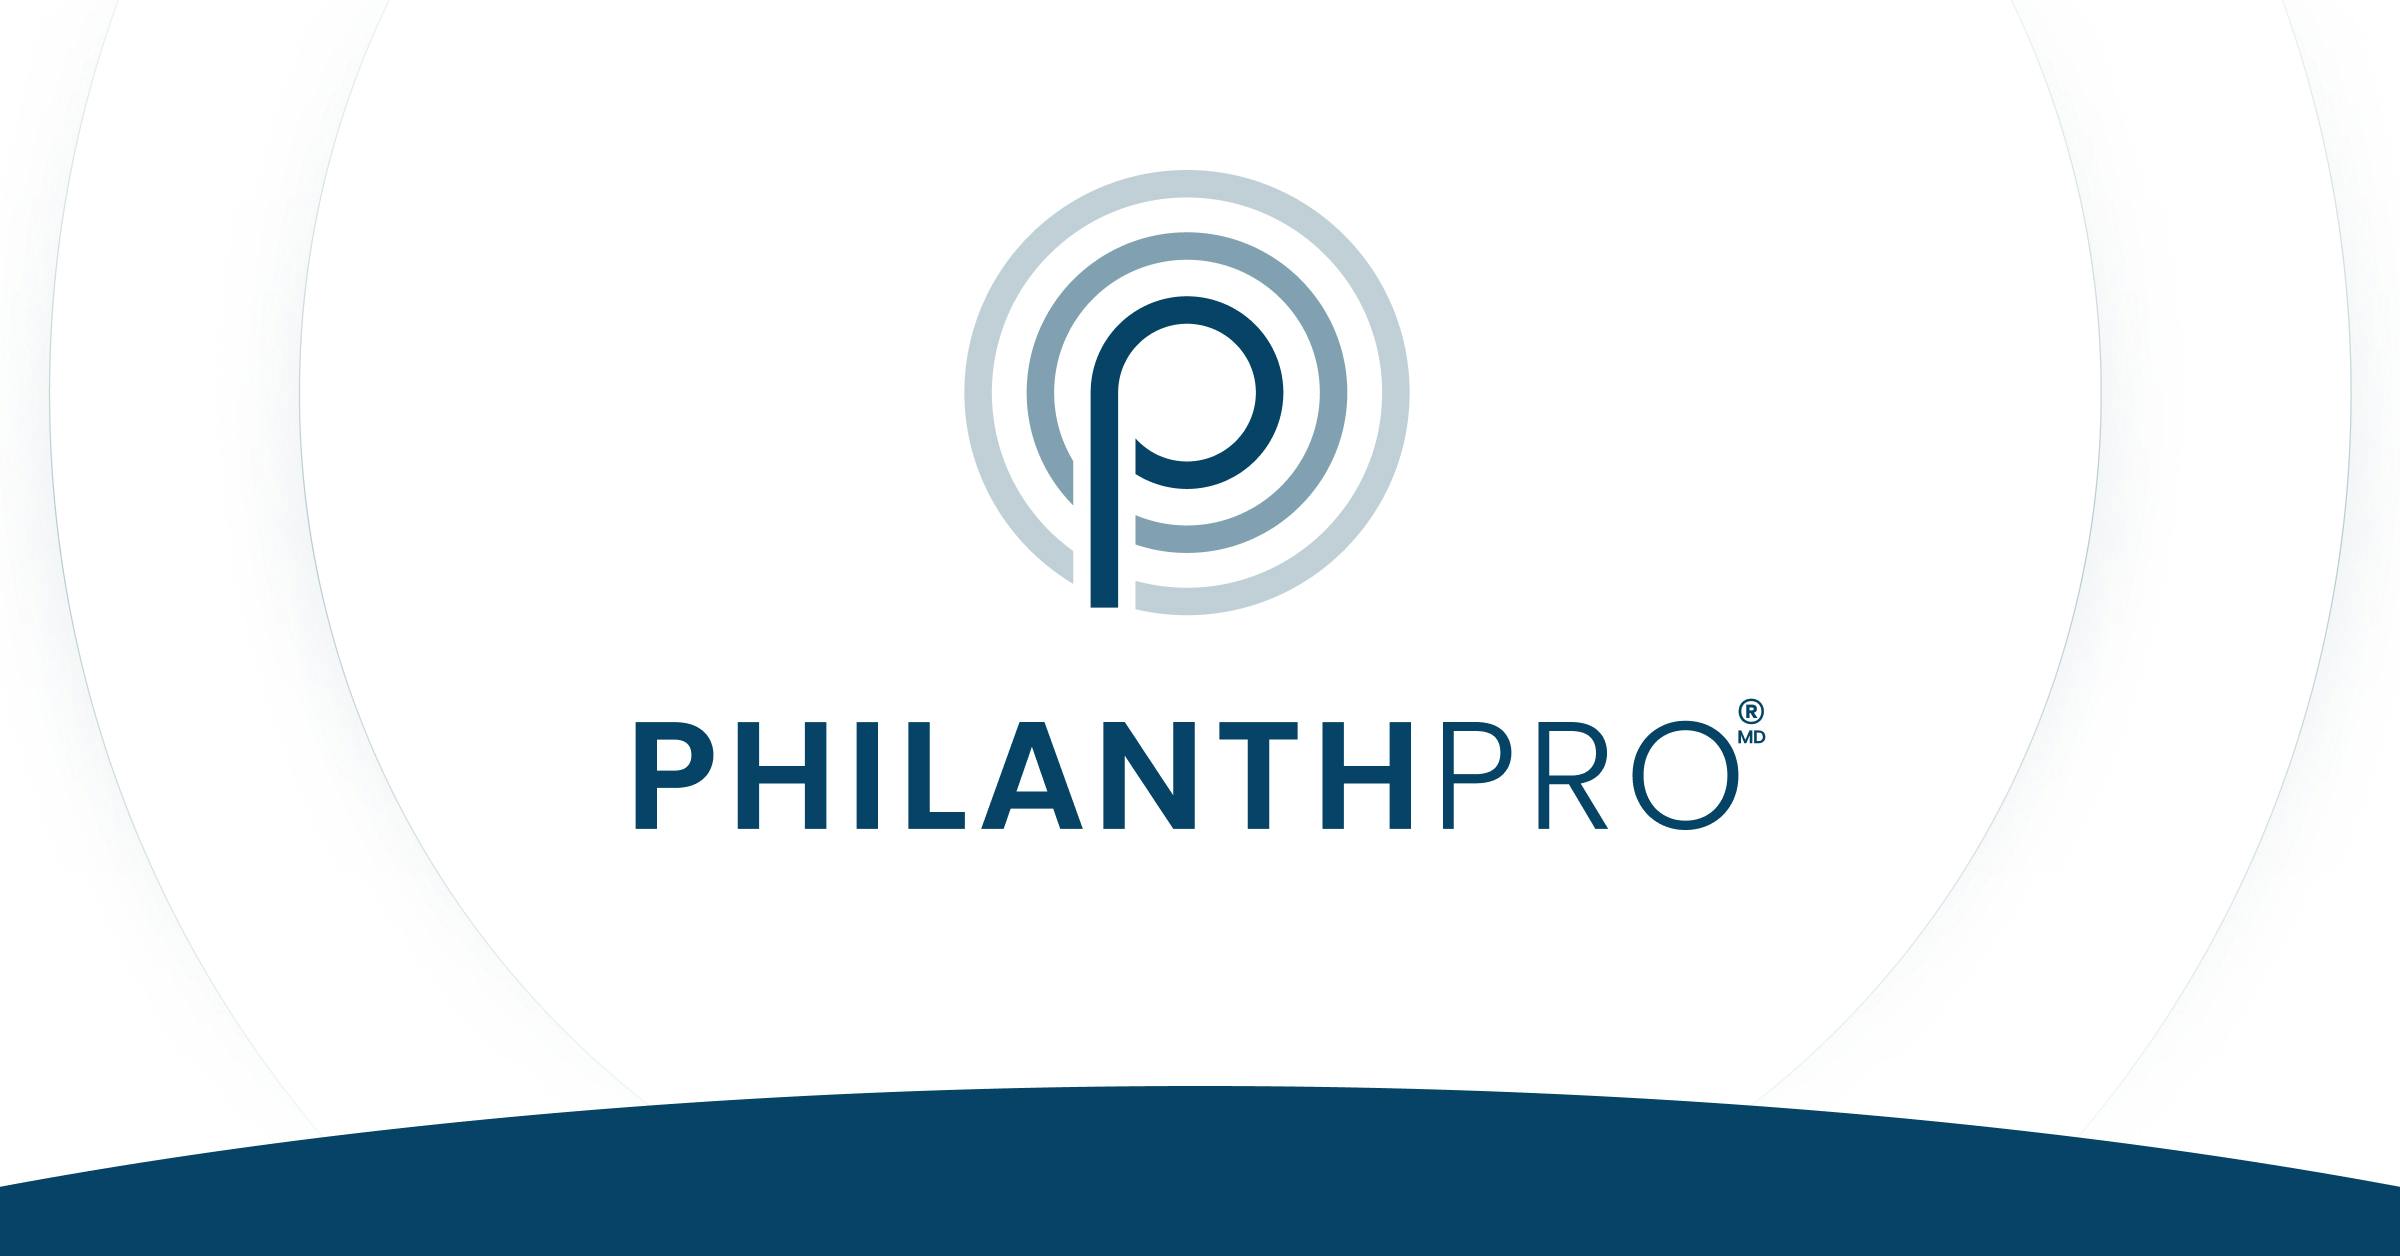 PhilanthPro P-Logo Graphic